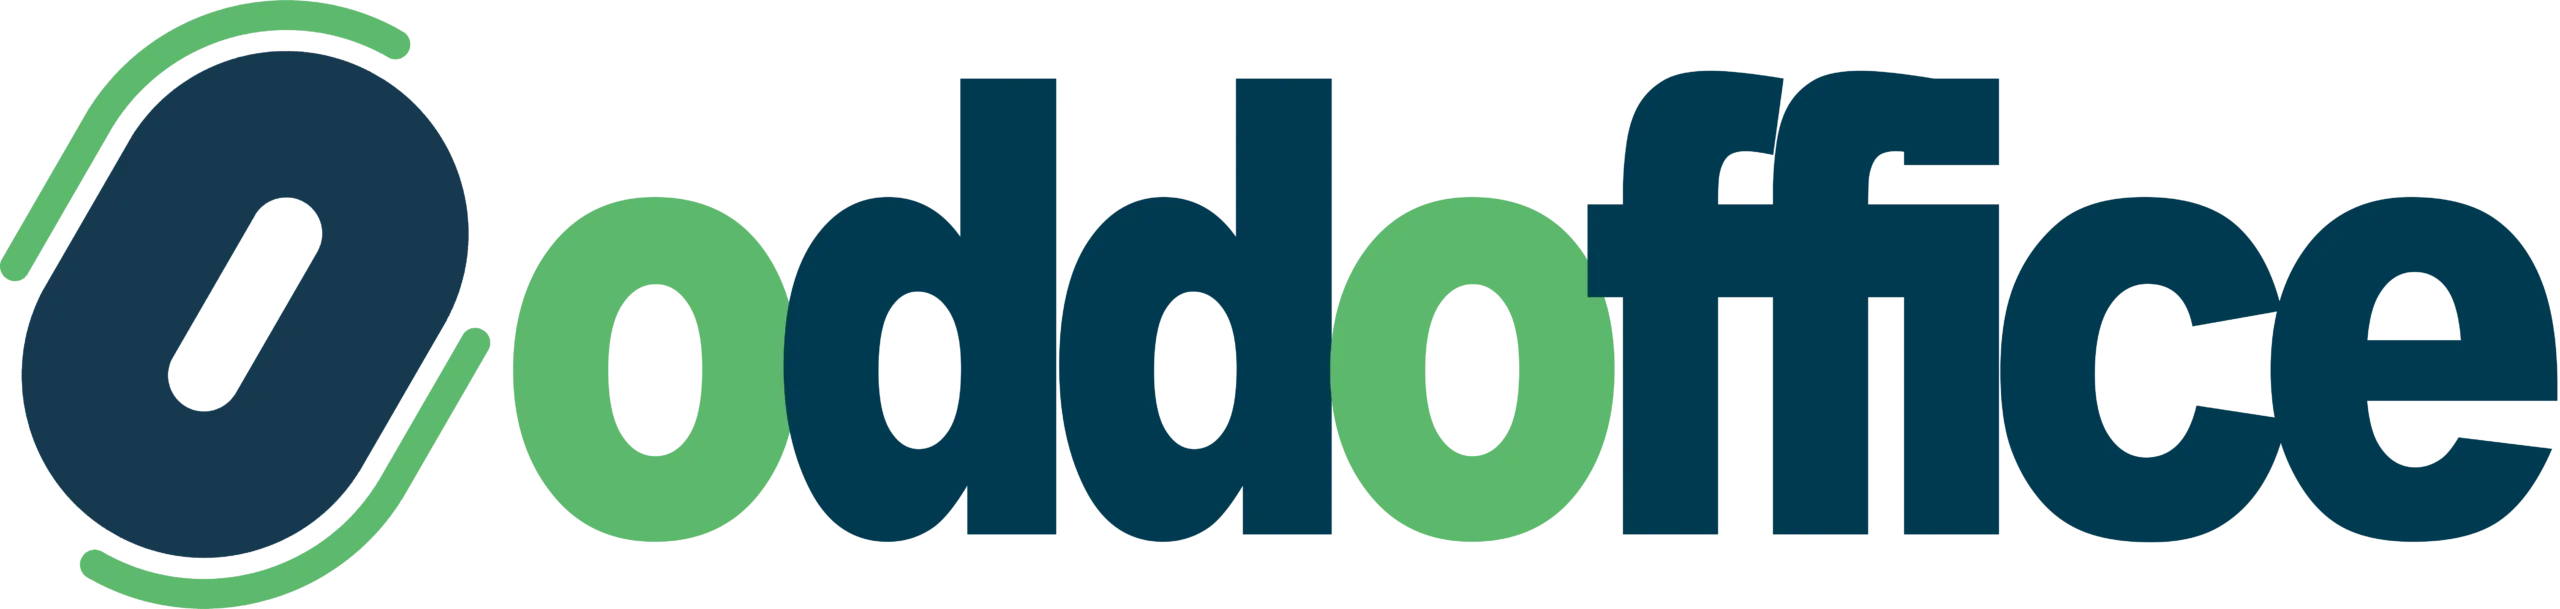 oddoffice logo